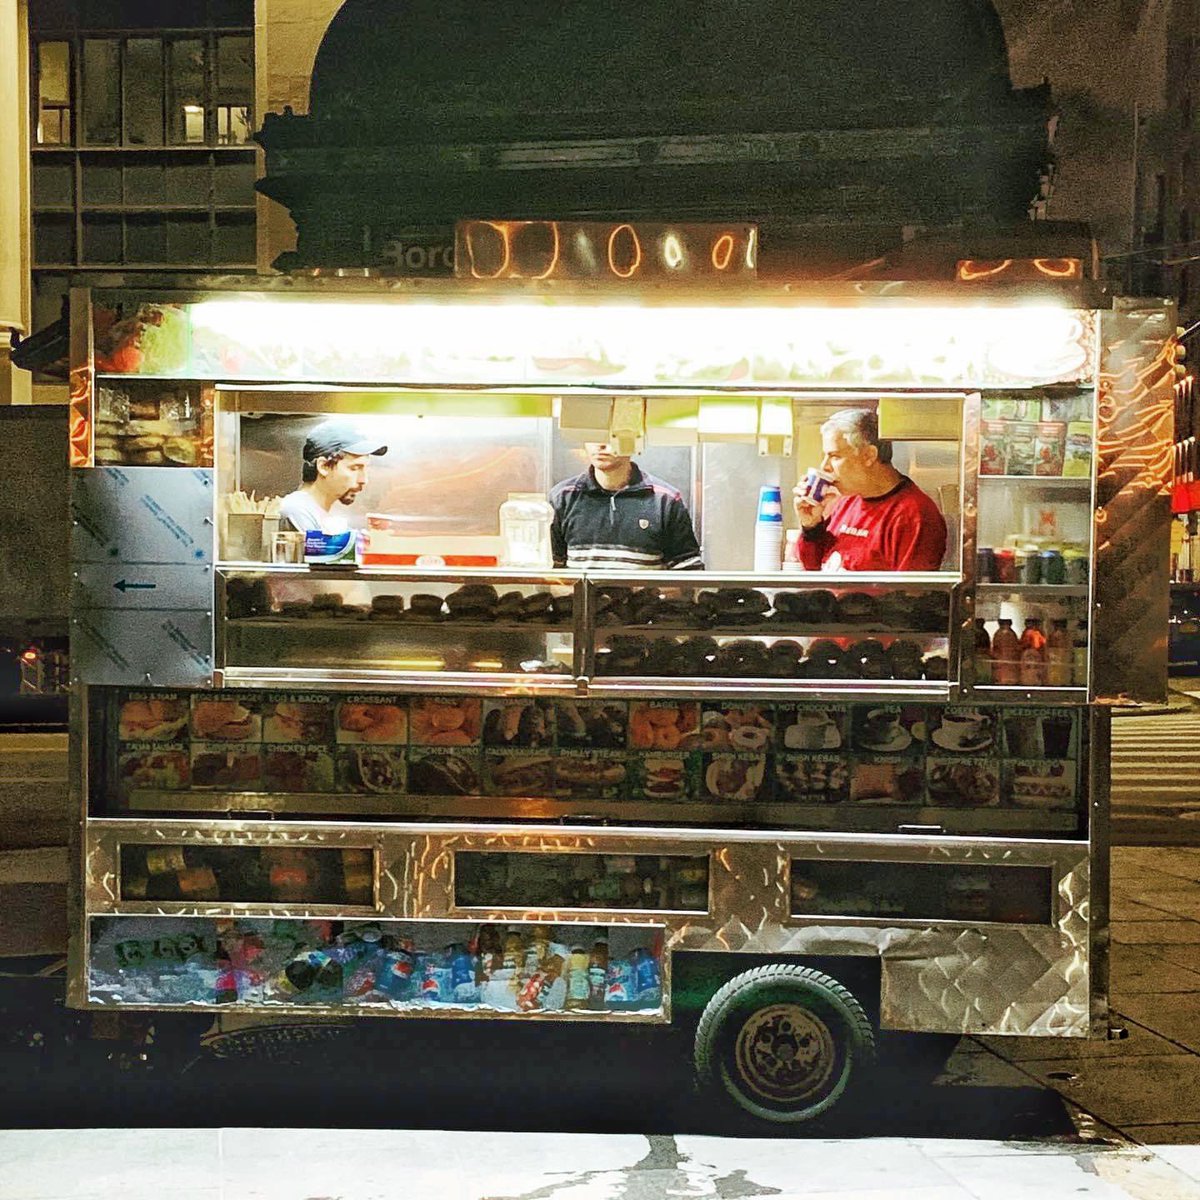 #boroughhall #Brooklyn #NewYorkCity #citylife #foodvendor #bacon #streetstyle #streetphotography #streetphotographer #streetmeup #newyorkphotos #photooftheday #newyorkstateofmind #brooklynphotography